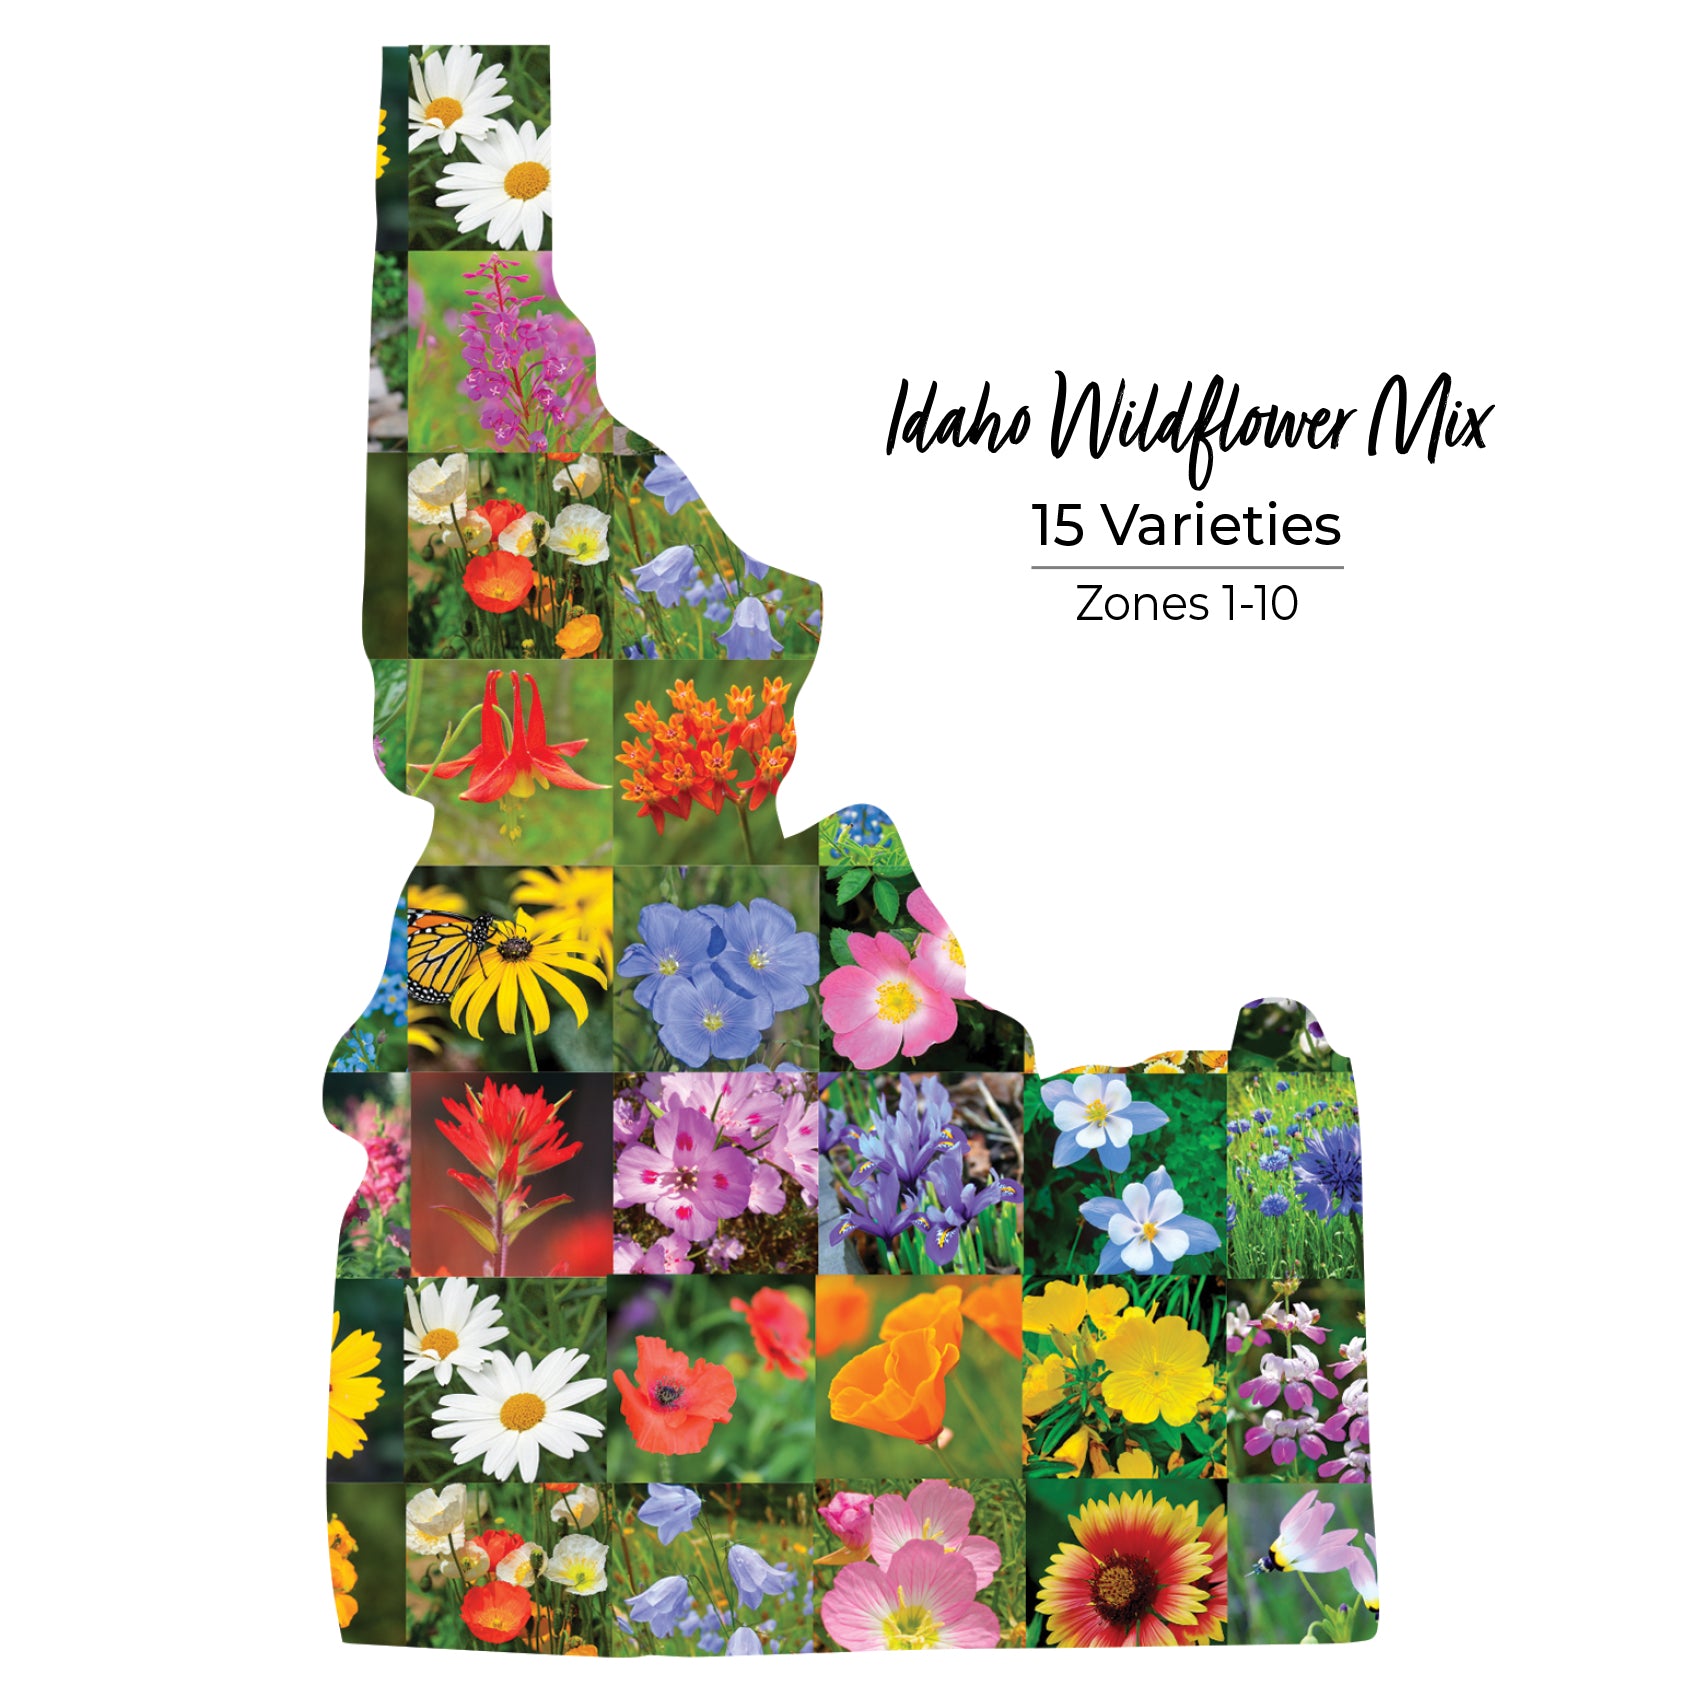 Idaho wildflower seed mix with 15 varieties